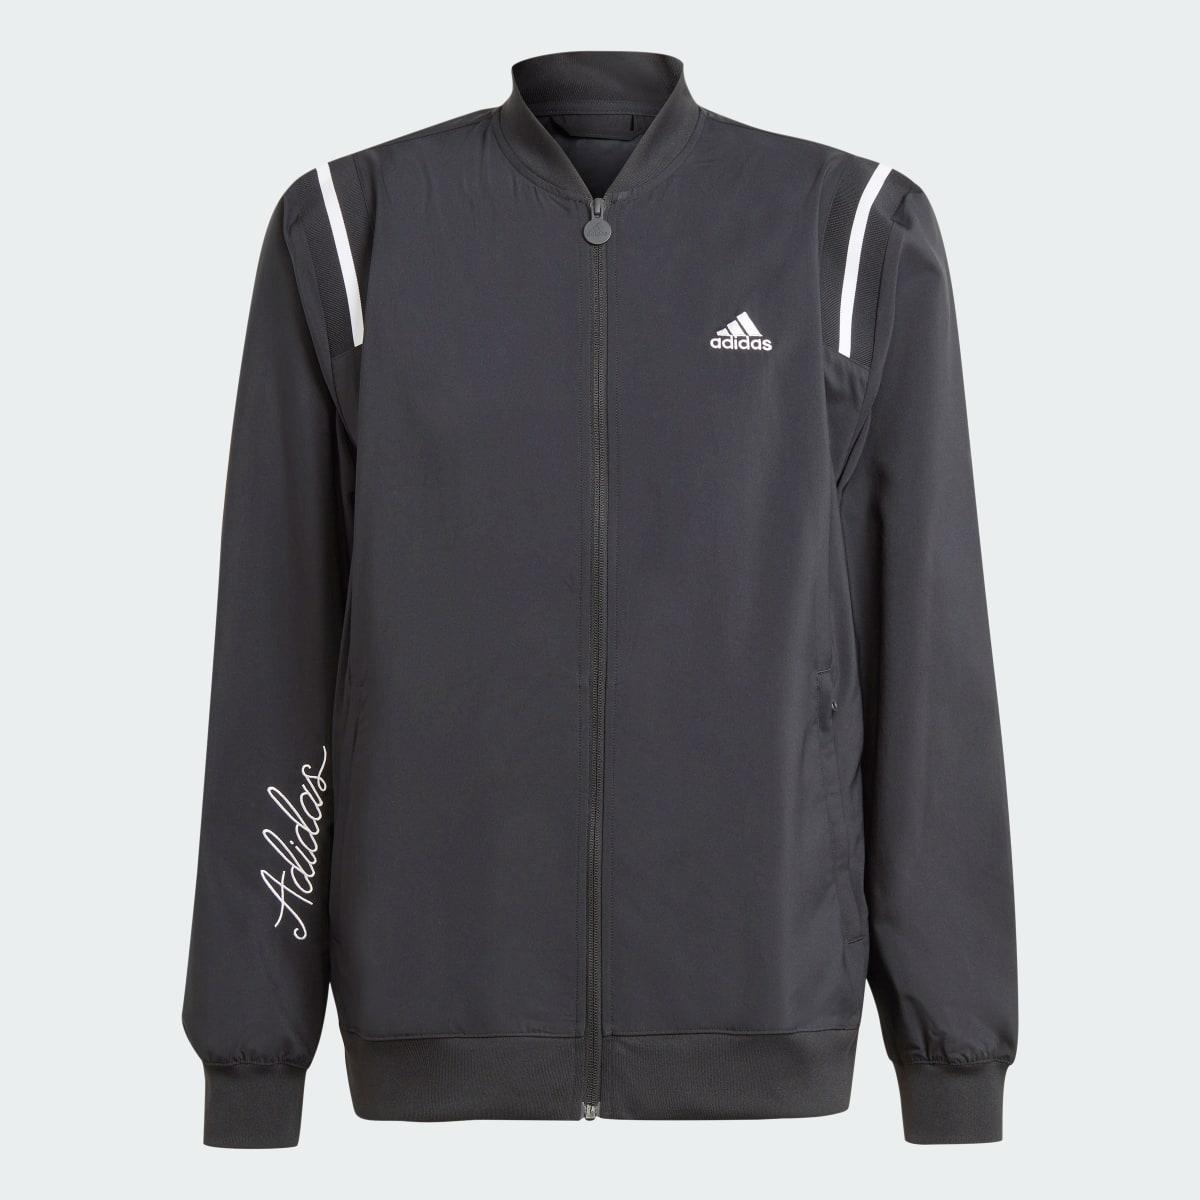 Adidas Scribble Jacket. 5